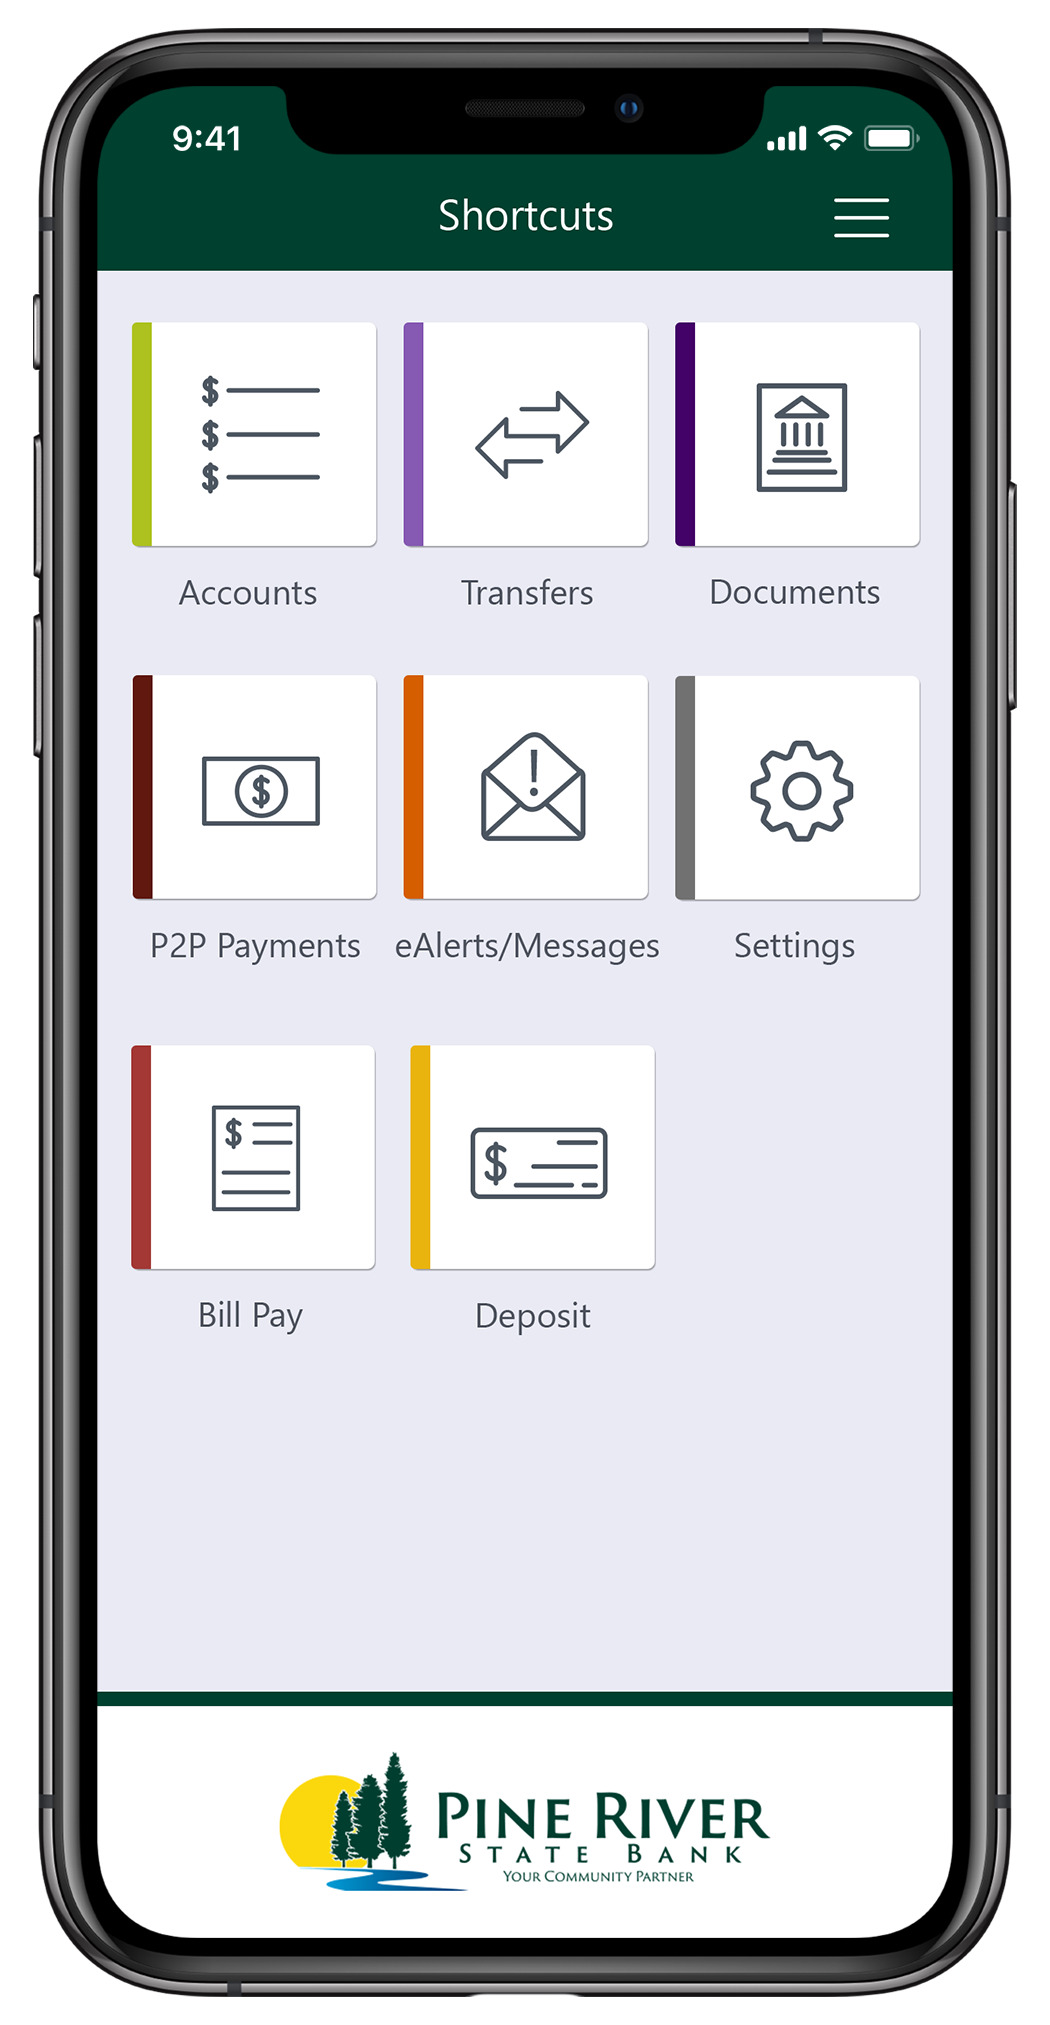 Pine River State Bank Mobile App Shortcuts Screen